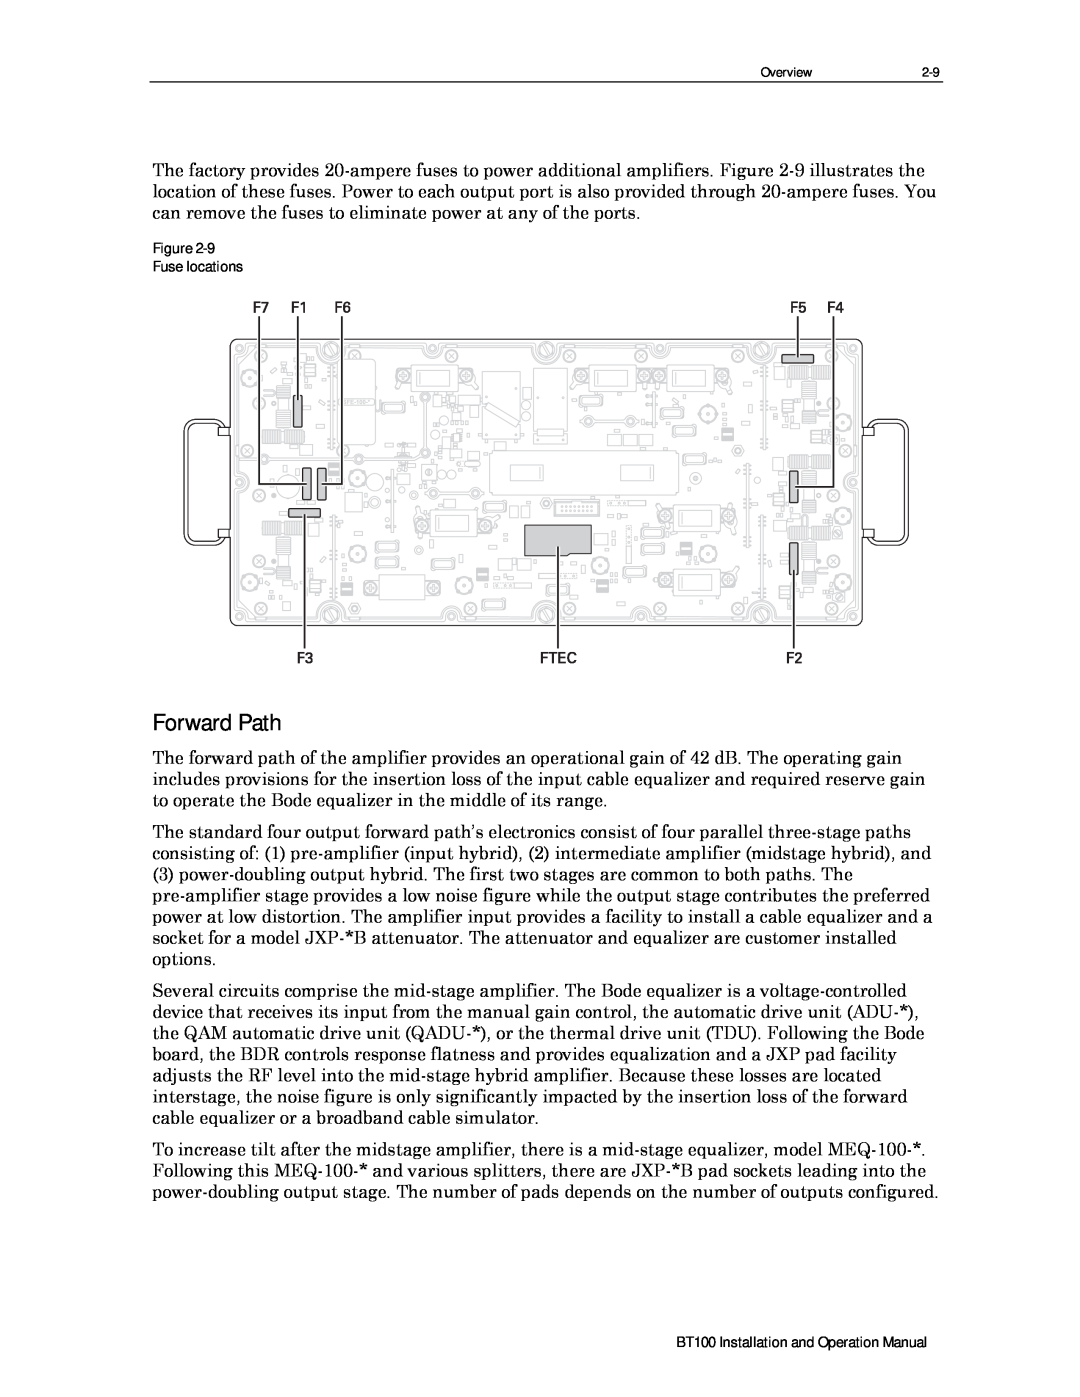 Motorola BT100 operation manual Forward Path, Figure Fuse locations 